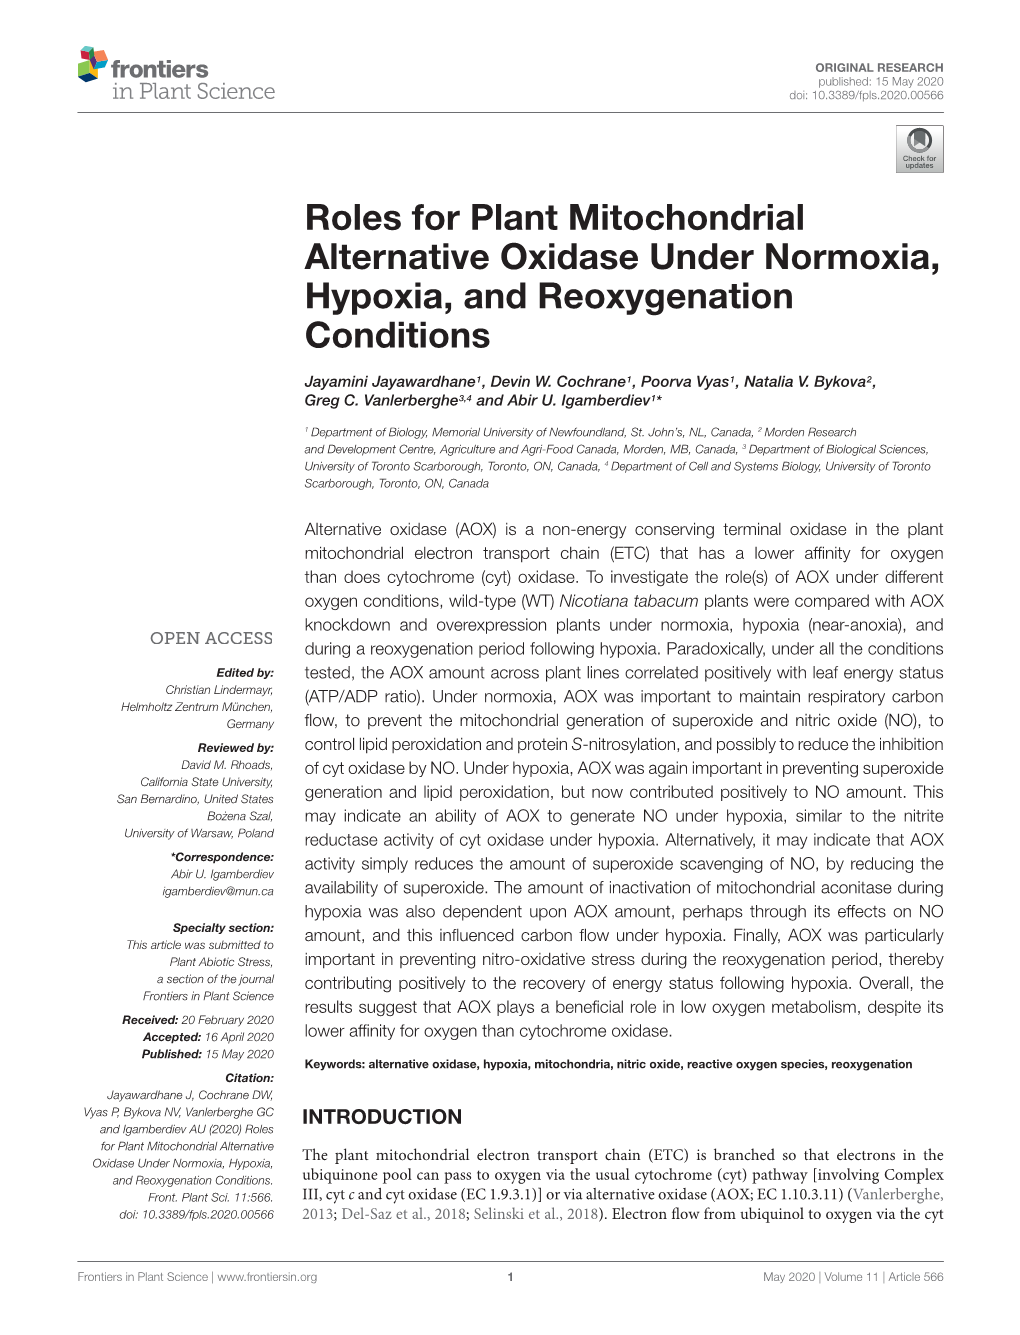 Roles for Plant Mitochondrial Alternative Oxidase Under Normoxia, Hypoxia, and Reoxygenation Conditions